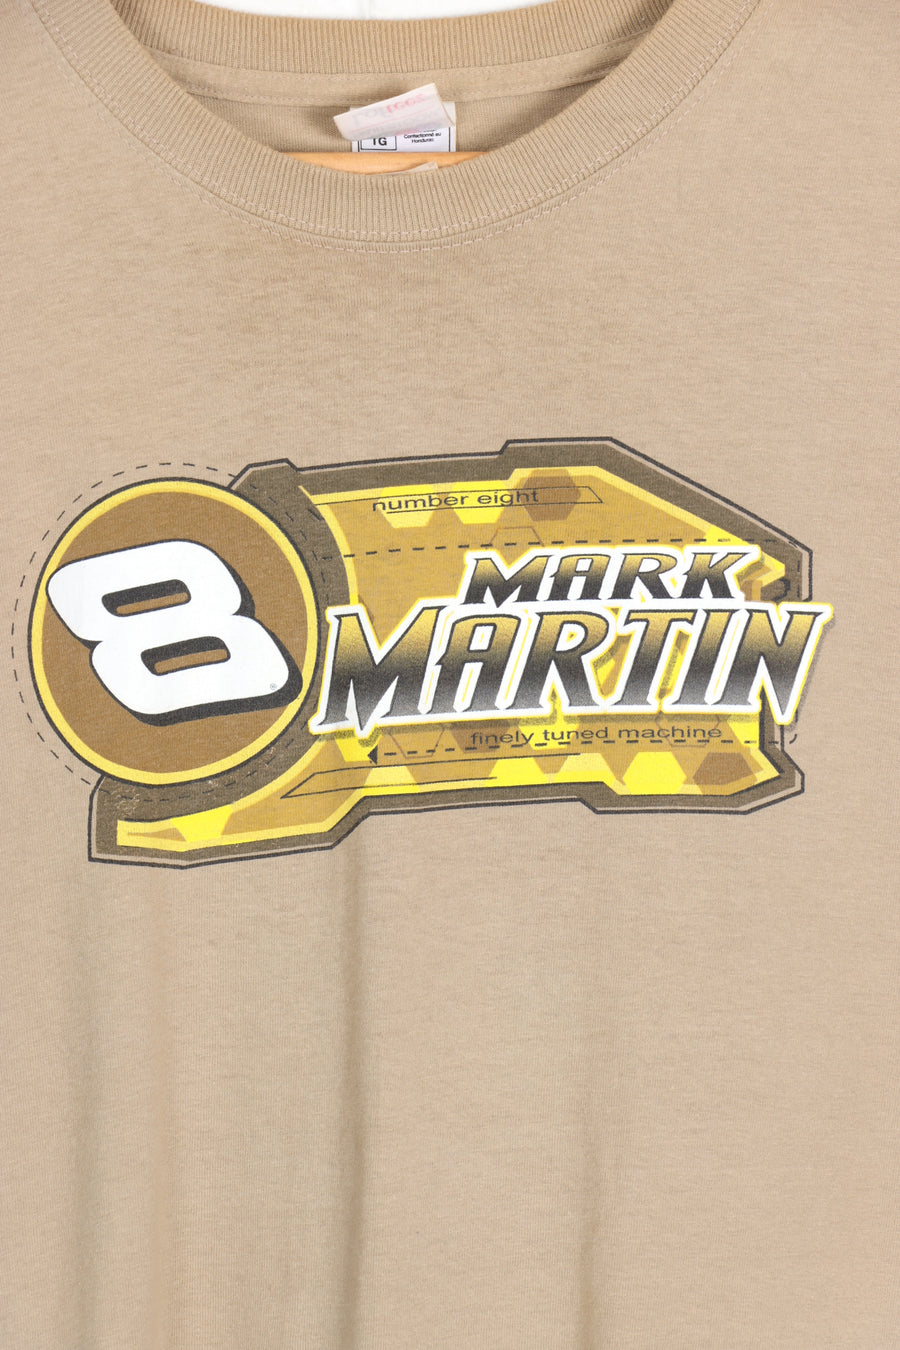 NASCAR Mark Martin Front & Back Racing Print Tee (XL)